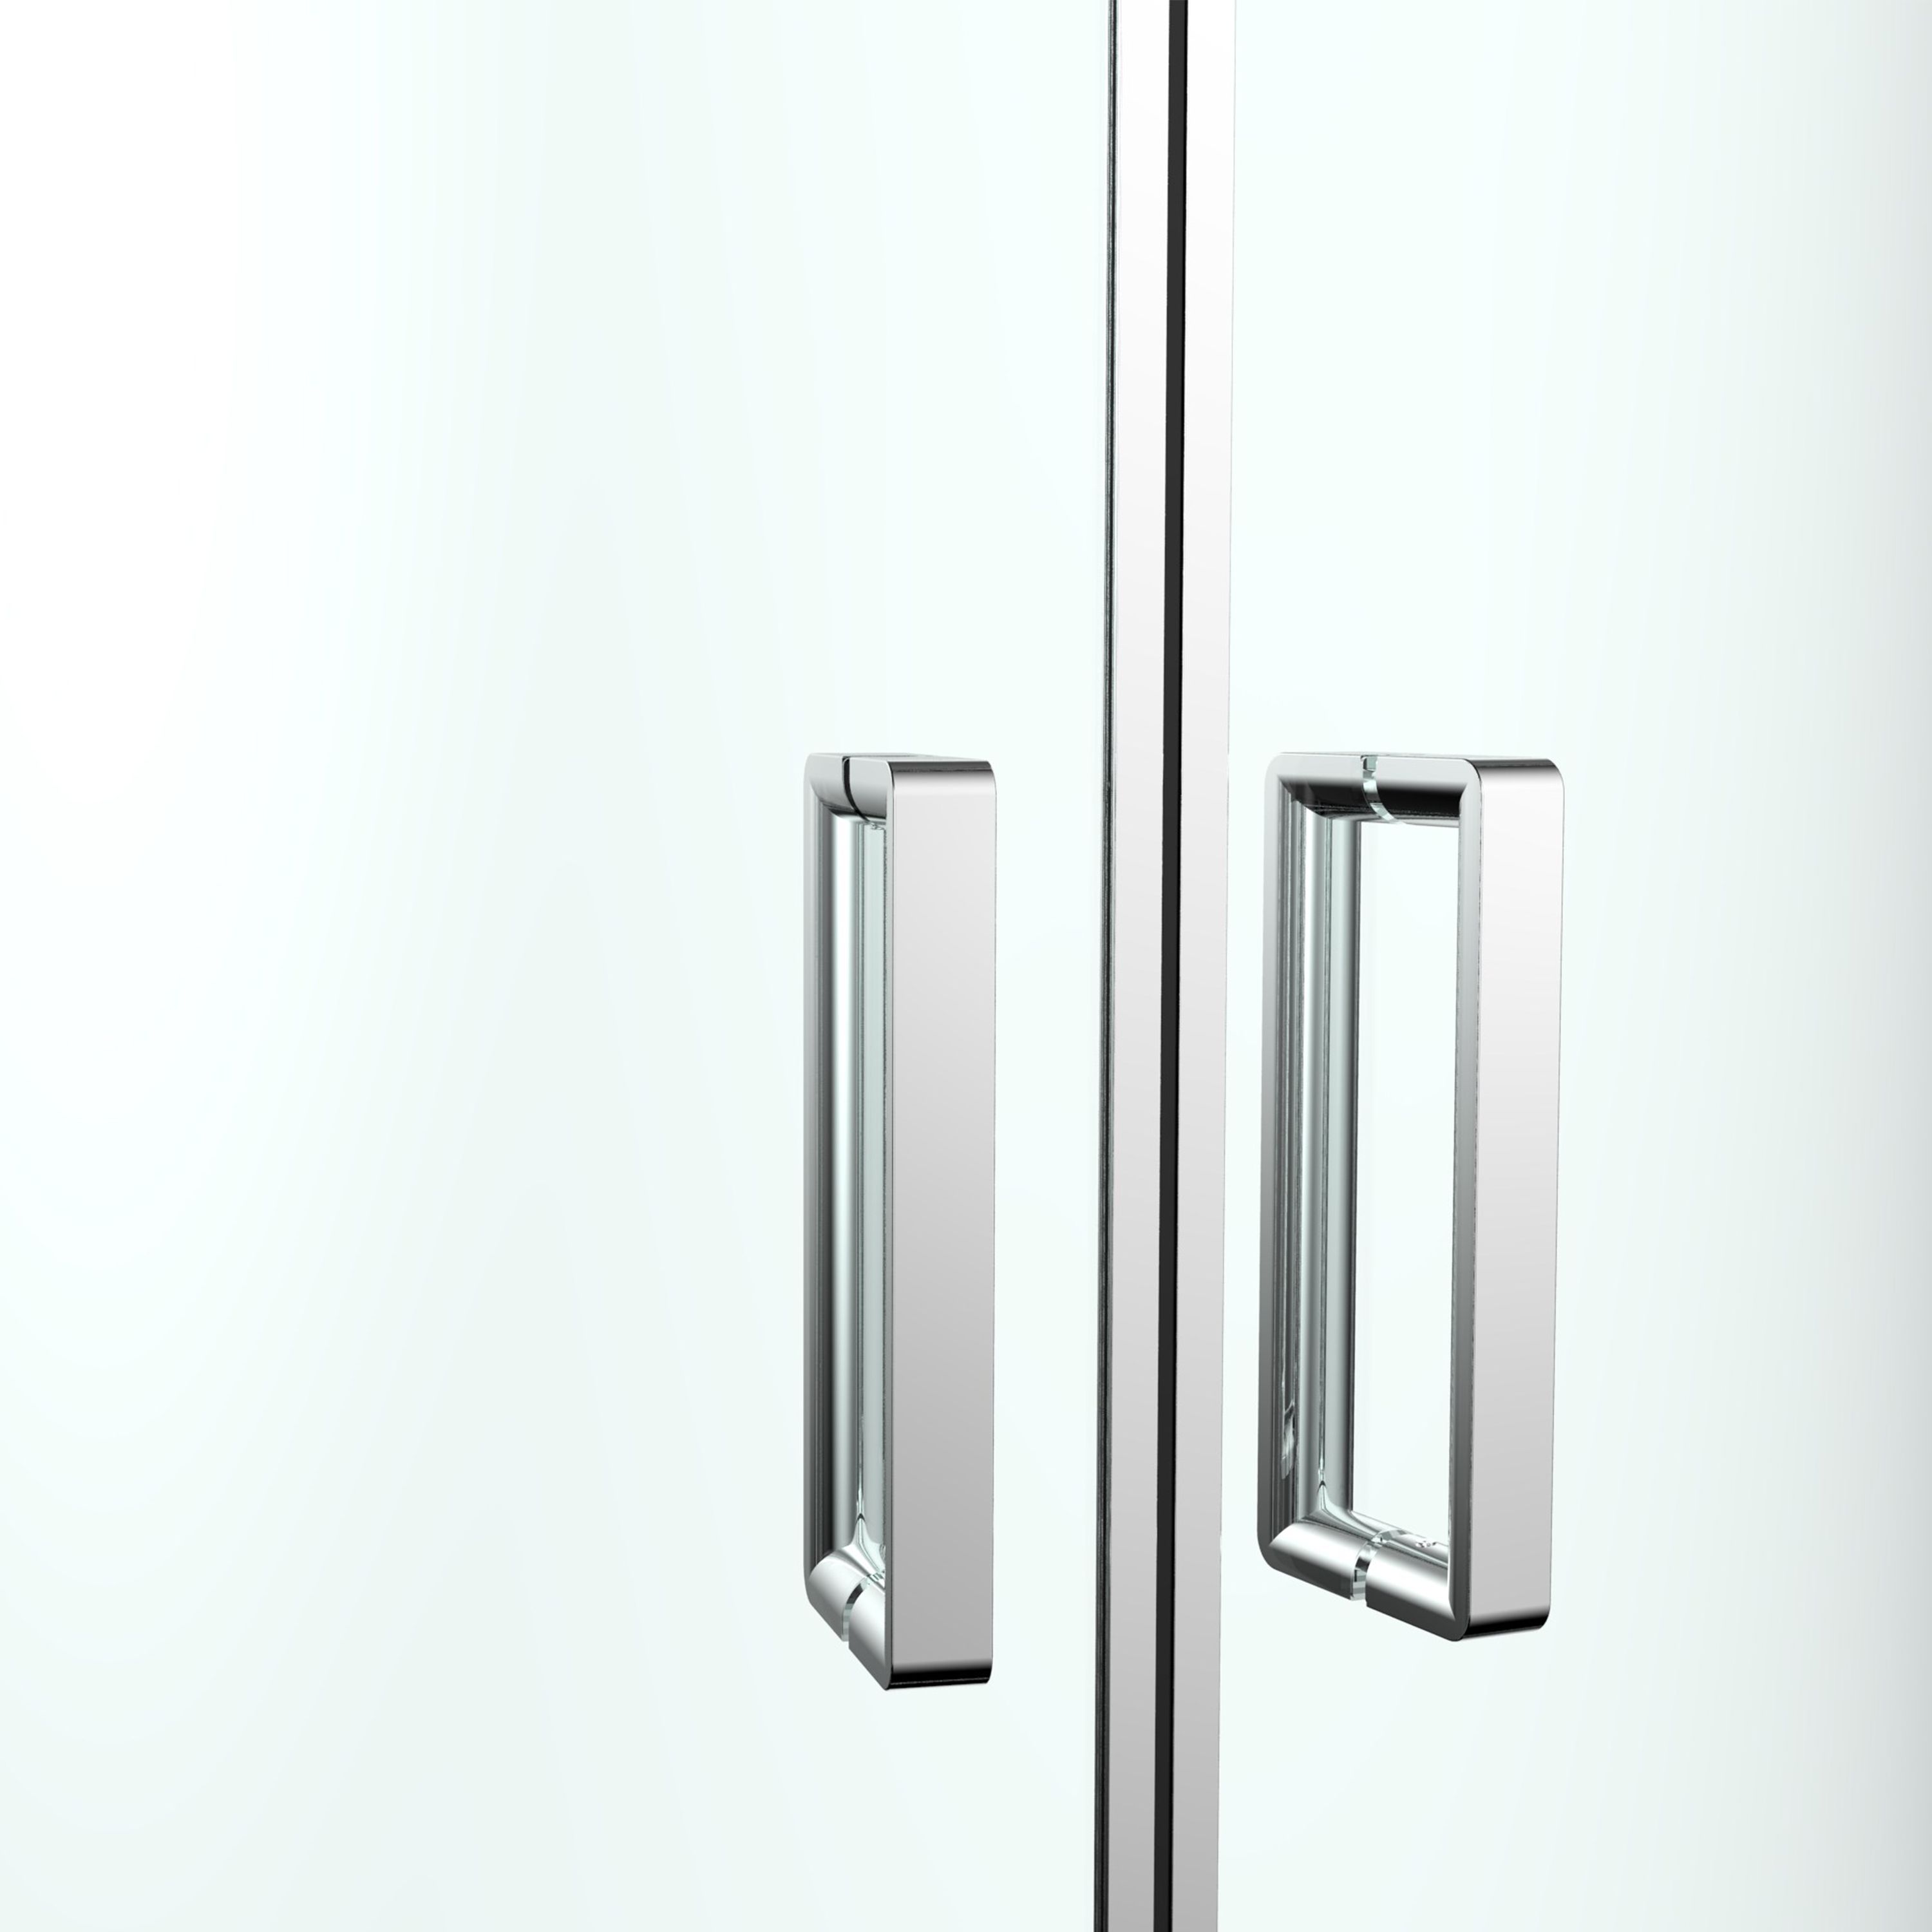 GoodHome Ledava Framed Clear glass Chrome effect Quadrant Shower enclosure - Corner entry double sliding door (W)90cm (D)90cm